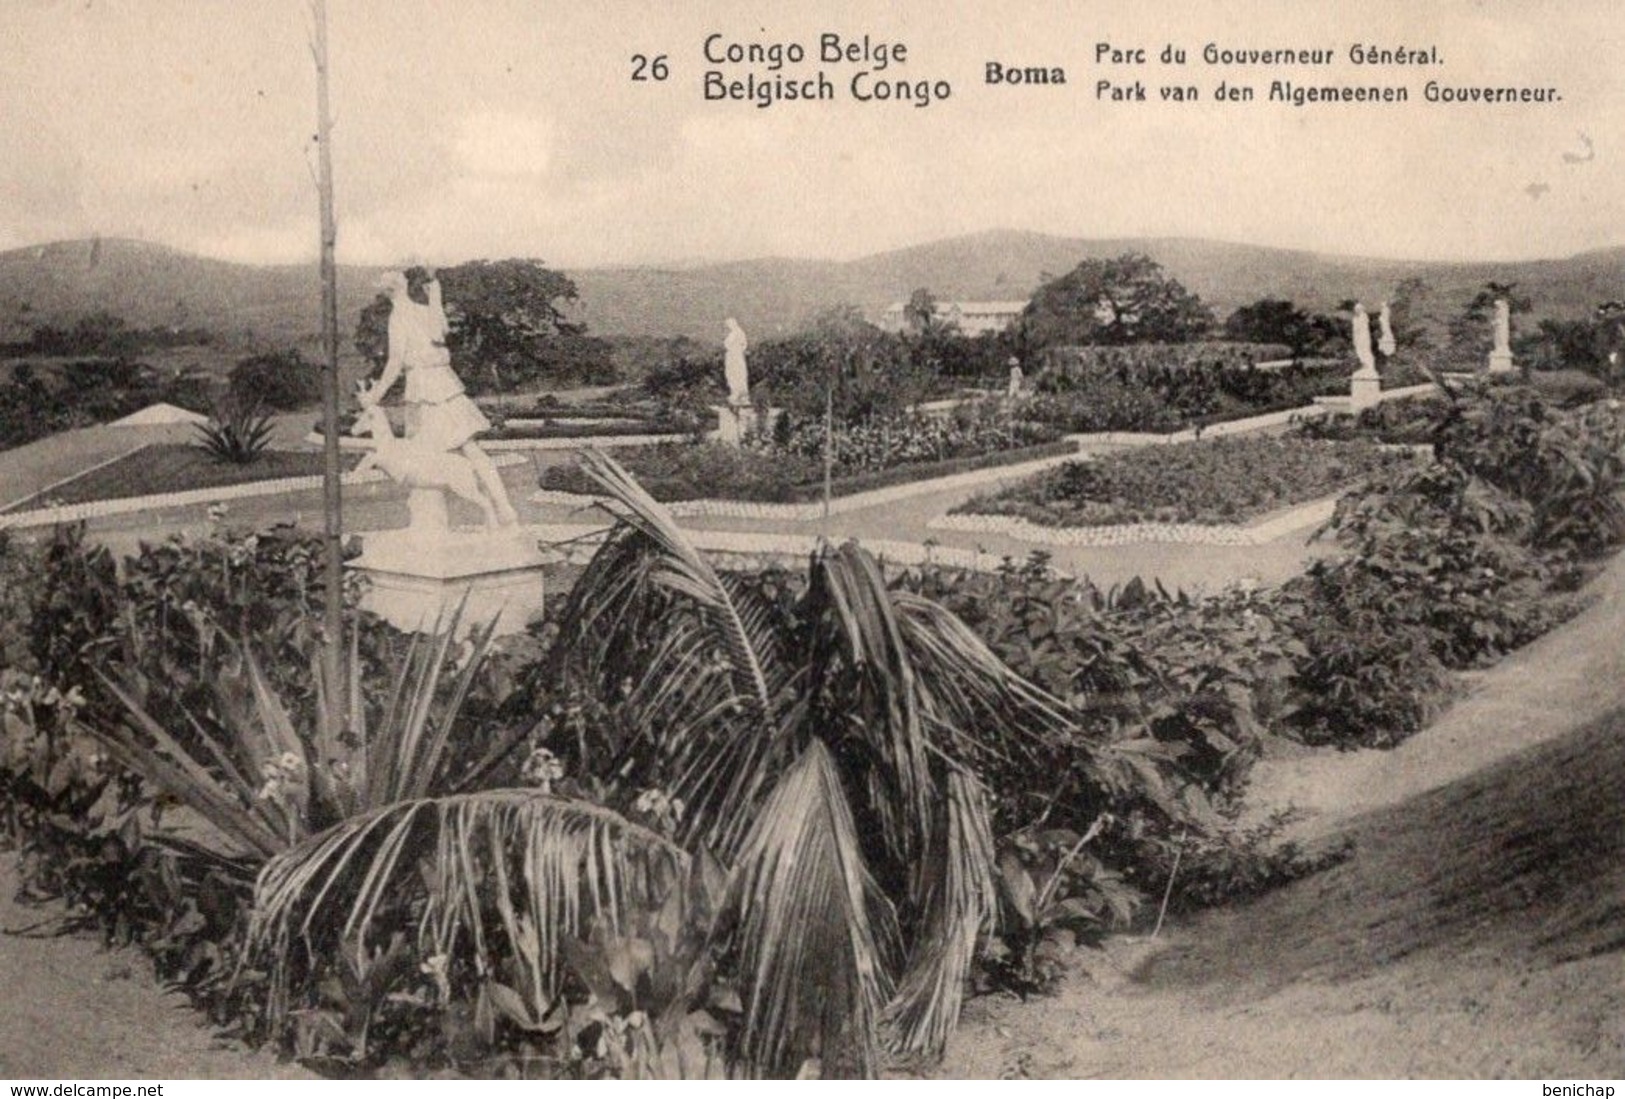 CPA CONGO BELGE - BOMA - PARC DU GOUVERNEUR GENERAL - NEUVE - NON CIRCULEE - ENTIER POSTAL. - Congo Belge